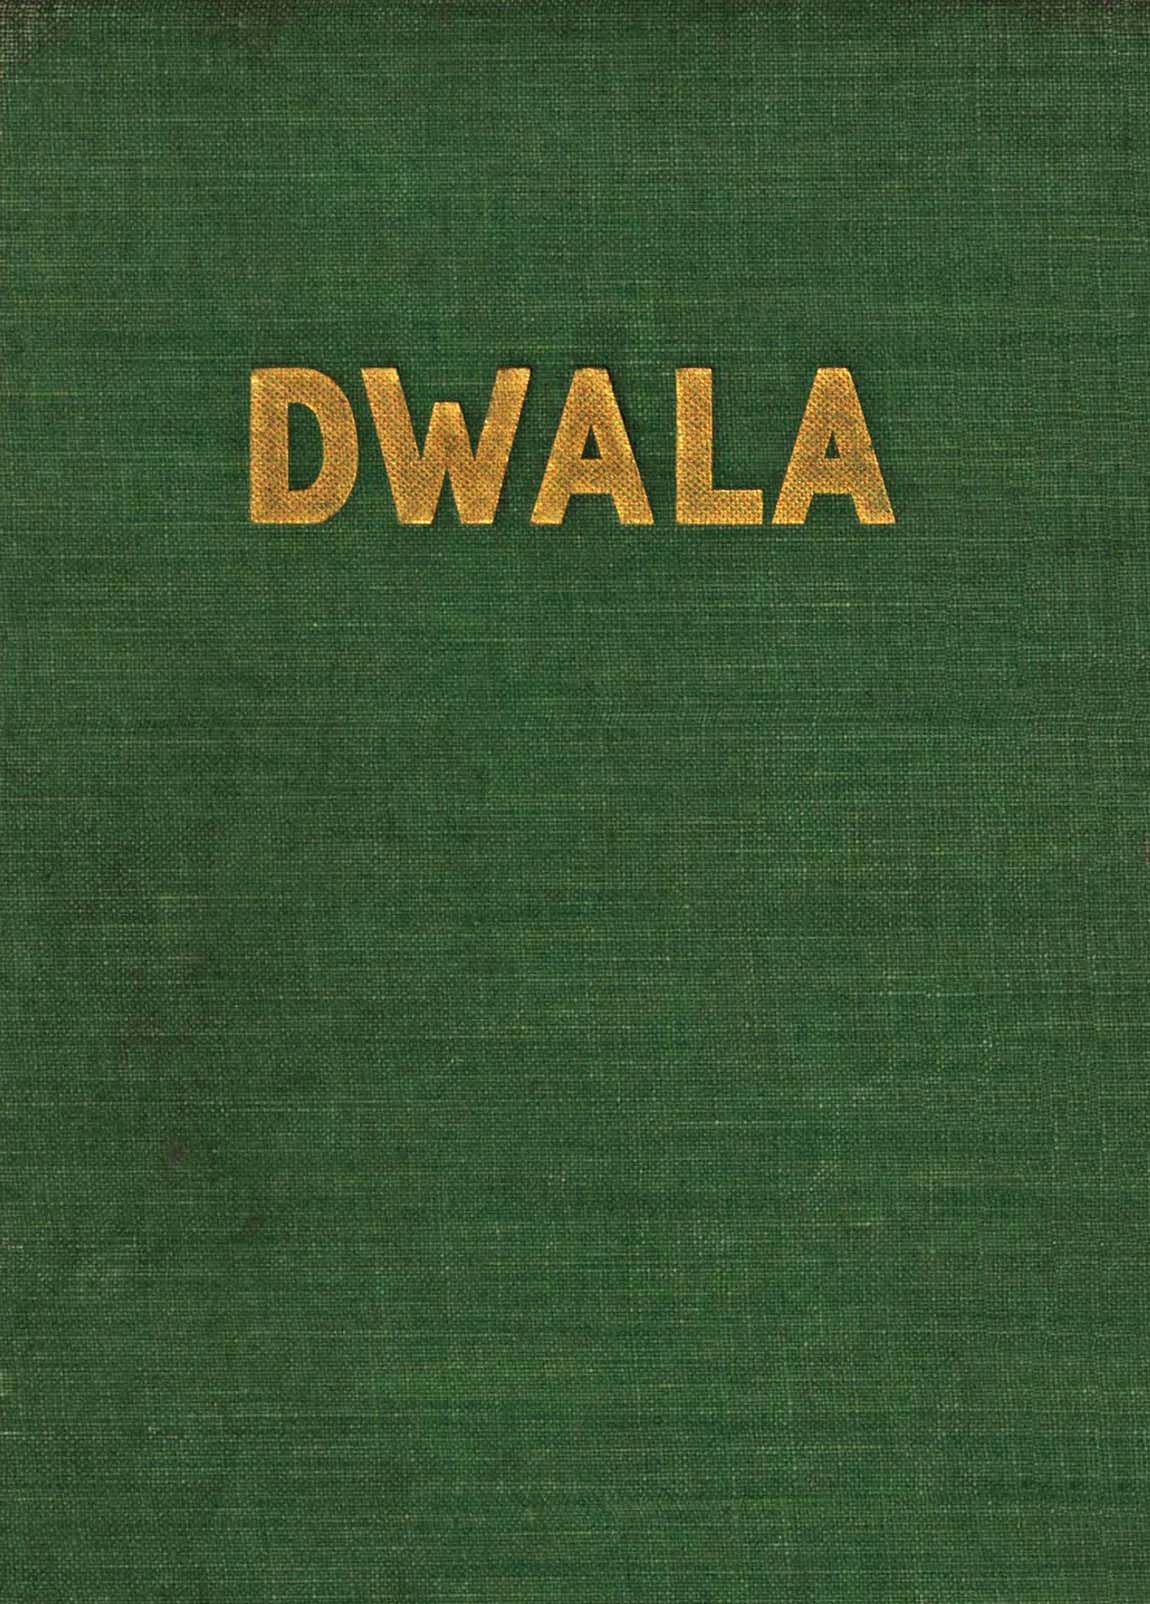 Dwala, by George Calderon—A Project Gutenberg eBook